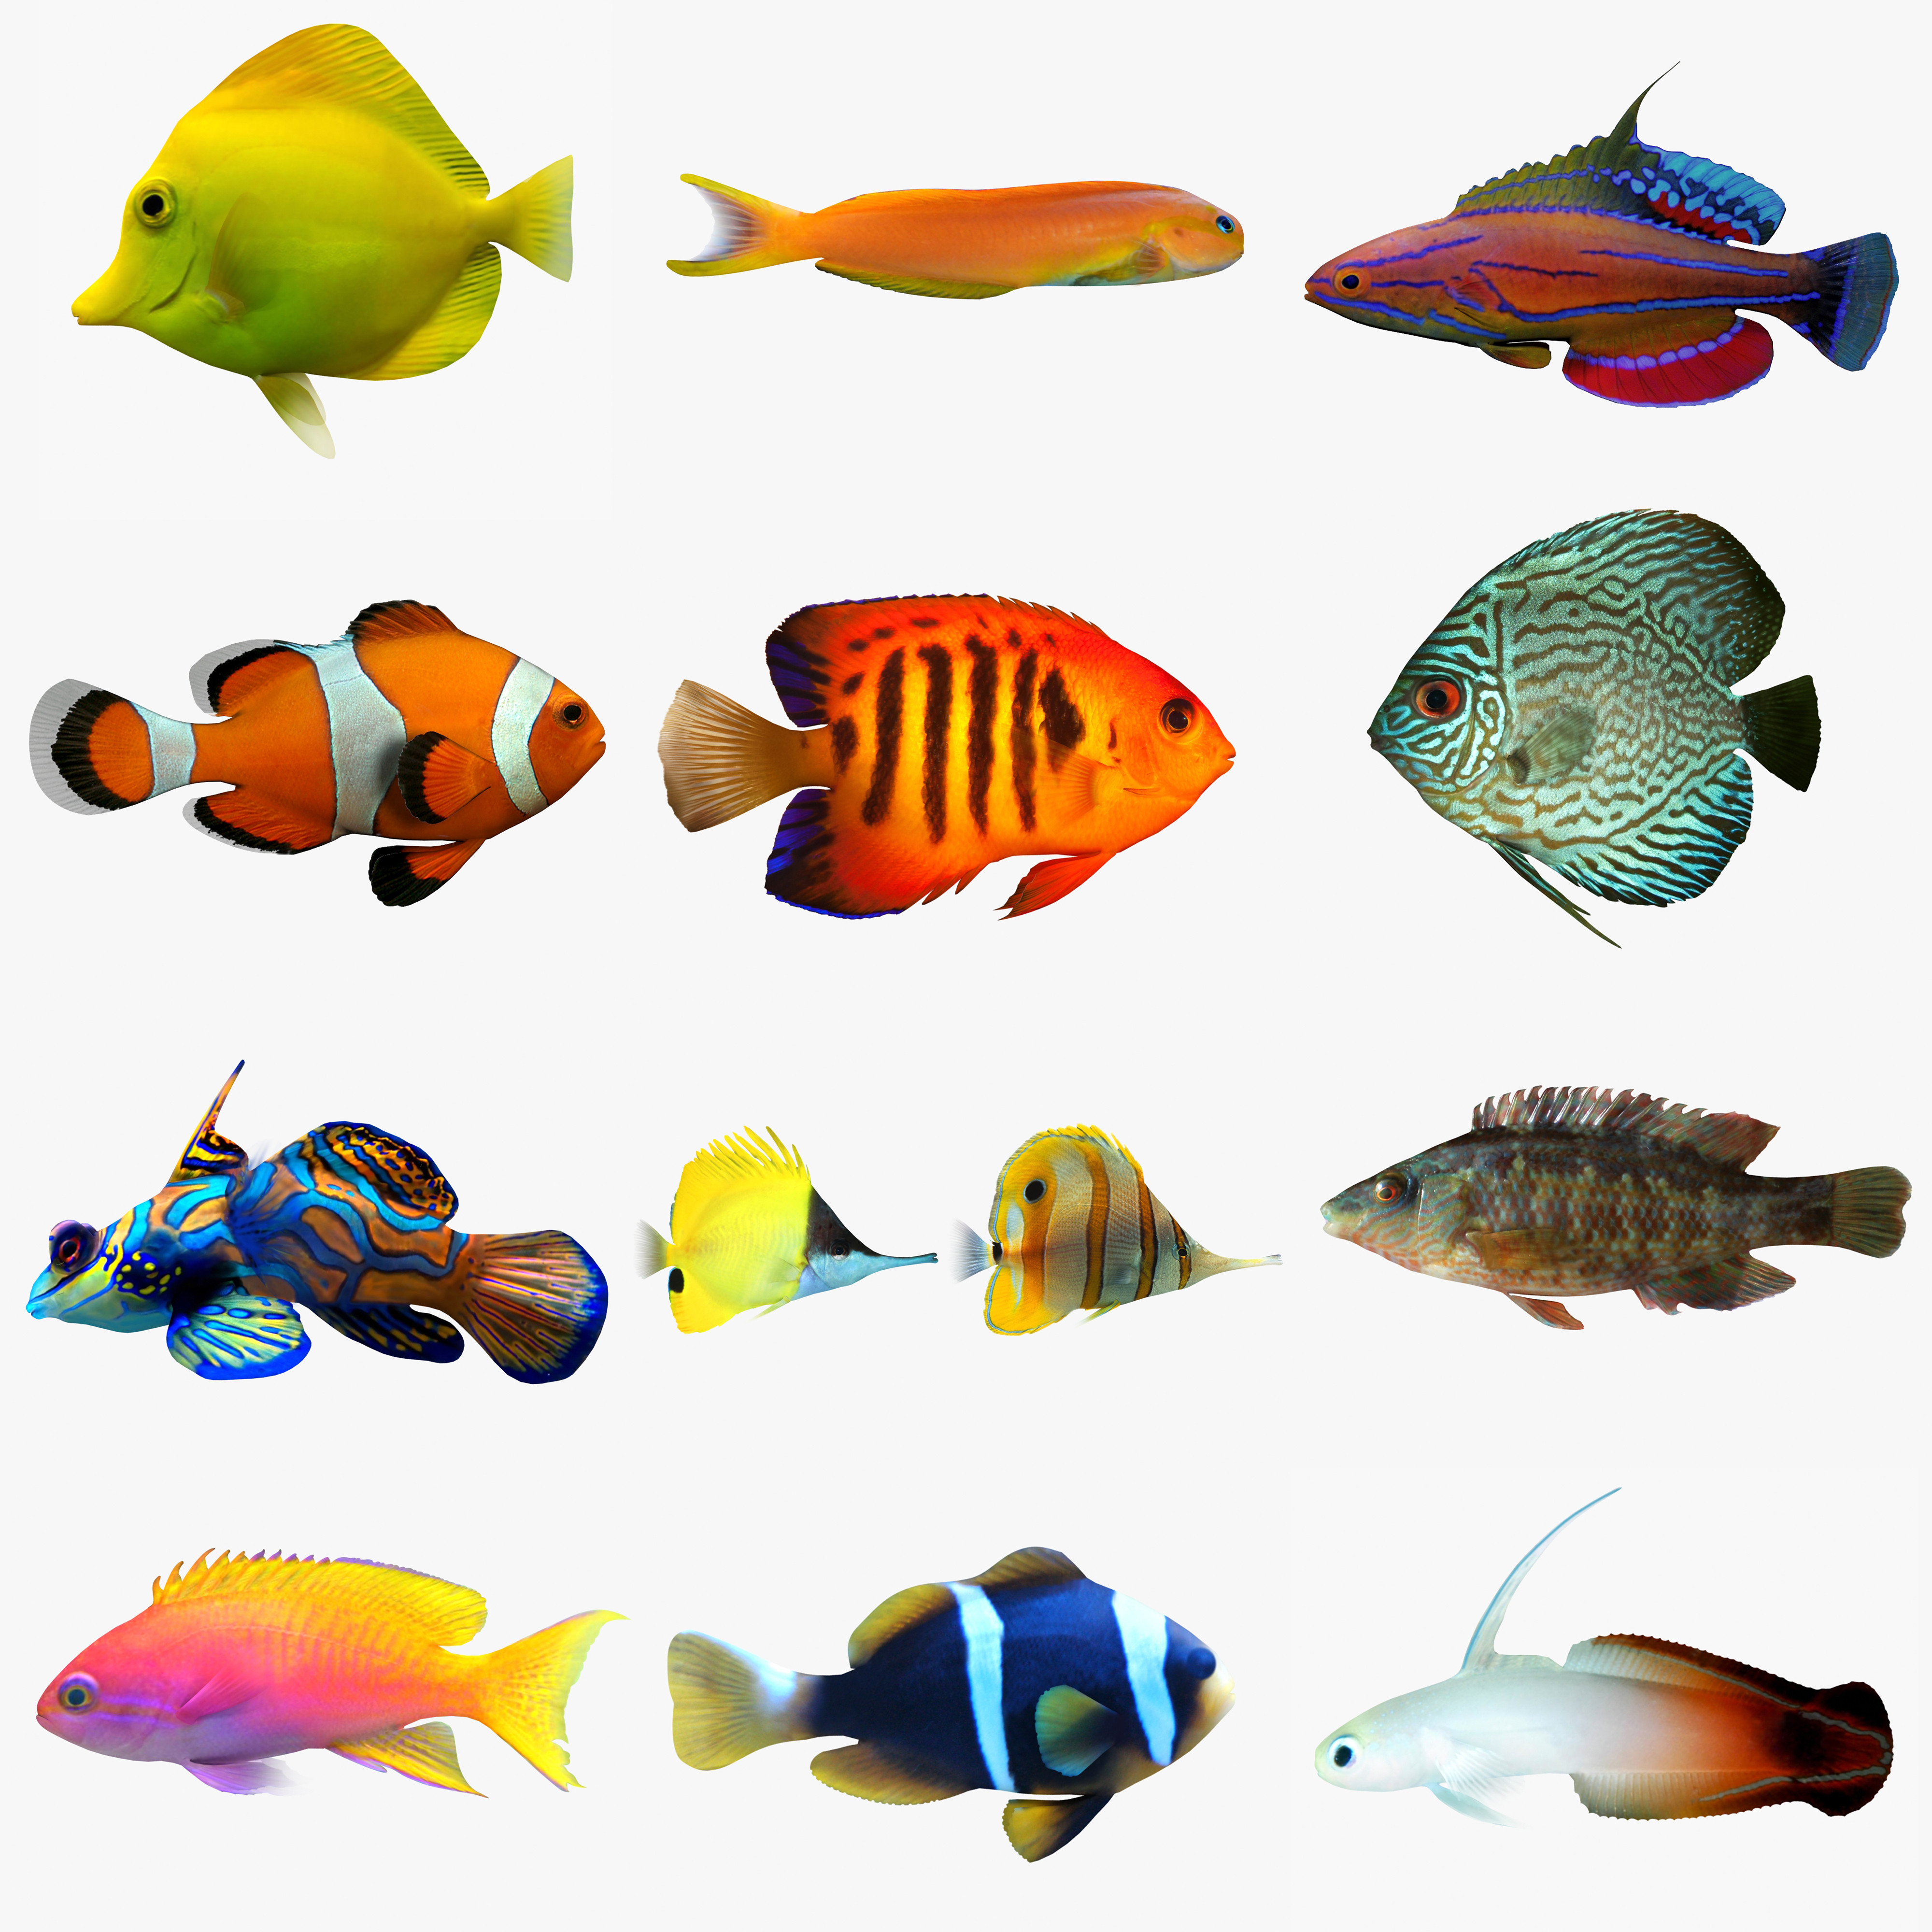 Free photo: Aquarium fish - Fish, Image, Nature - Free Download - Jooinn